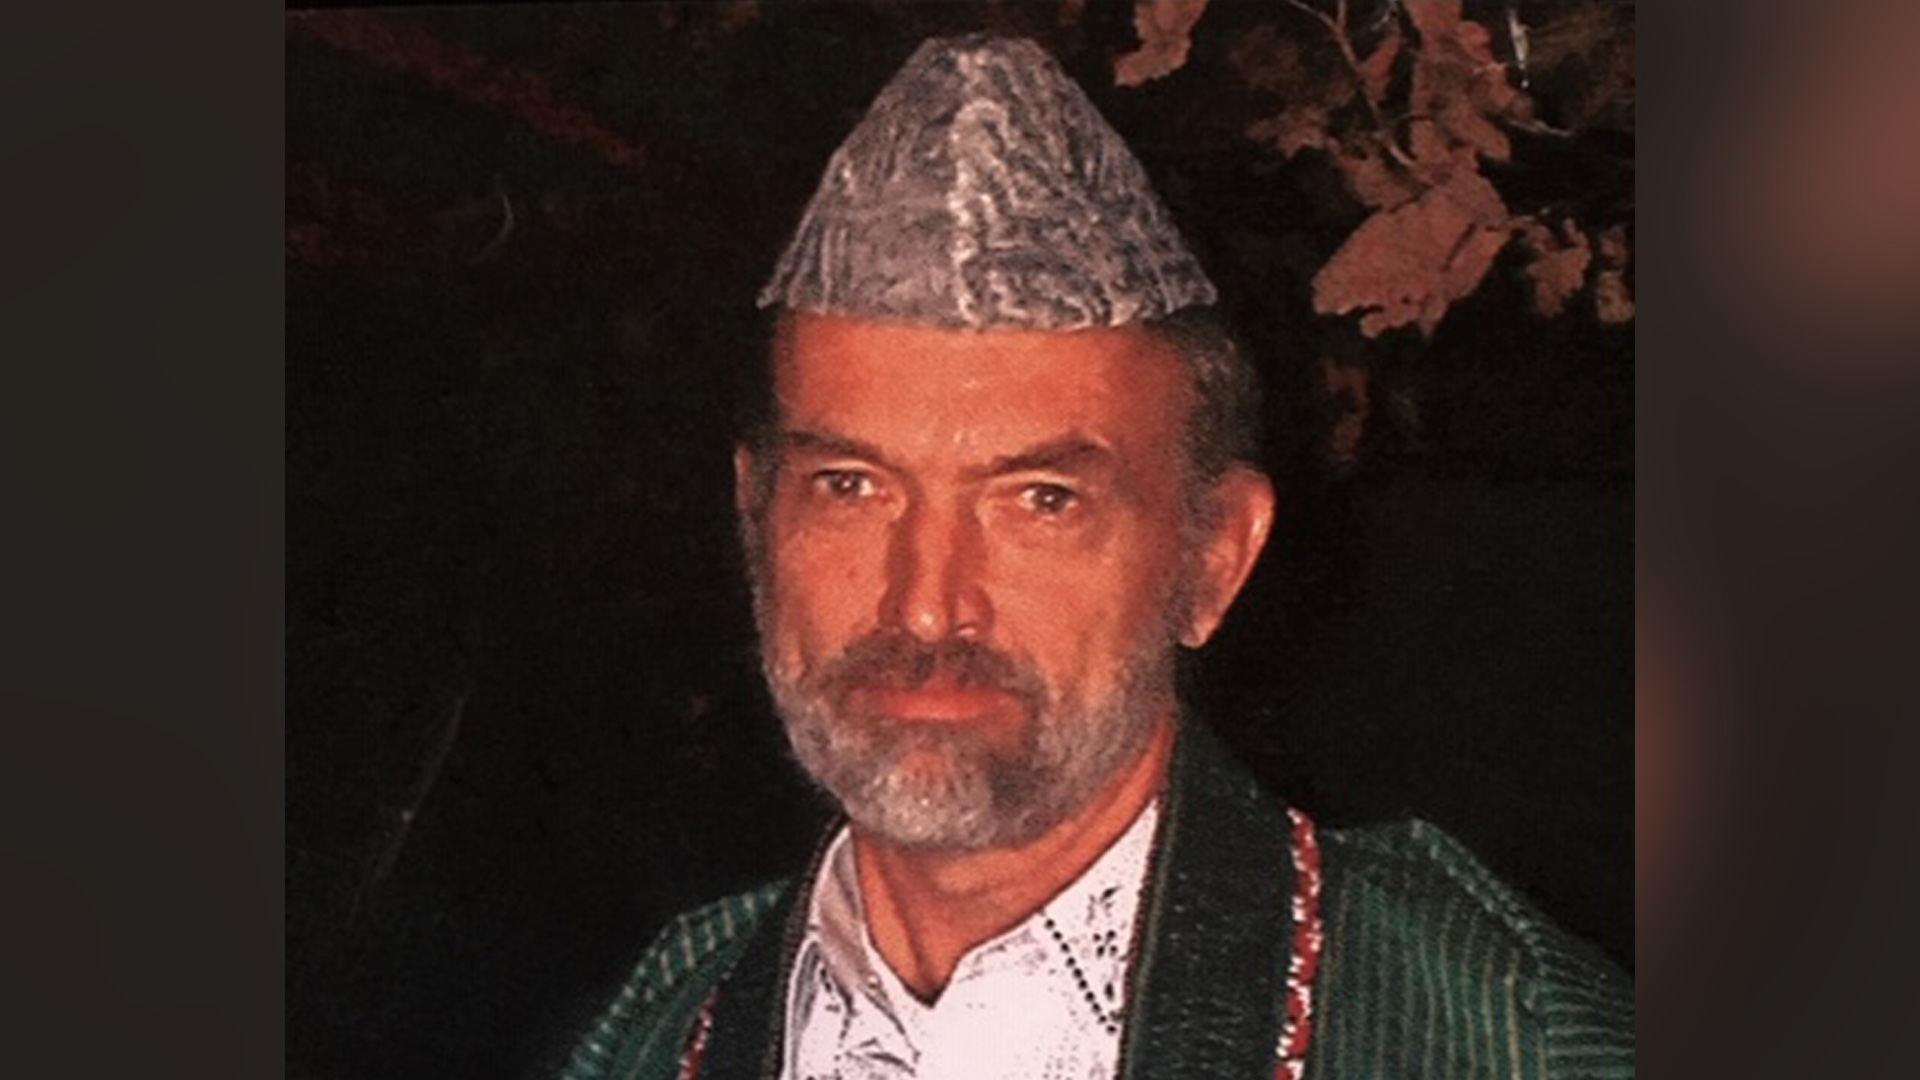 BONUS: Karzai’s hat